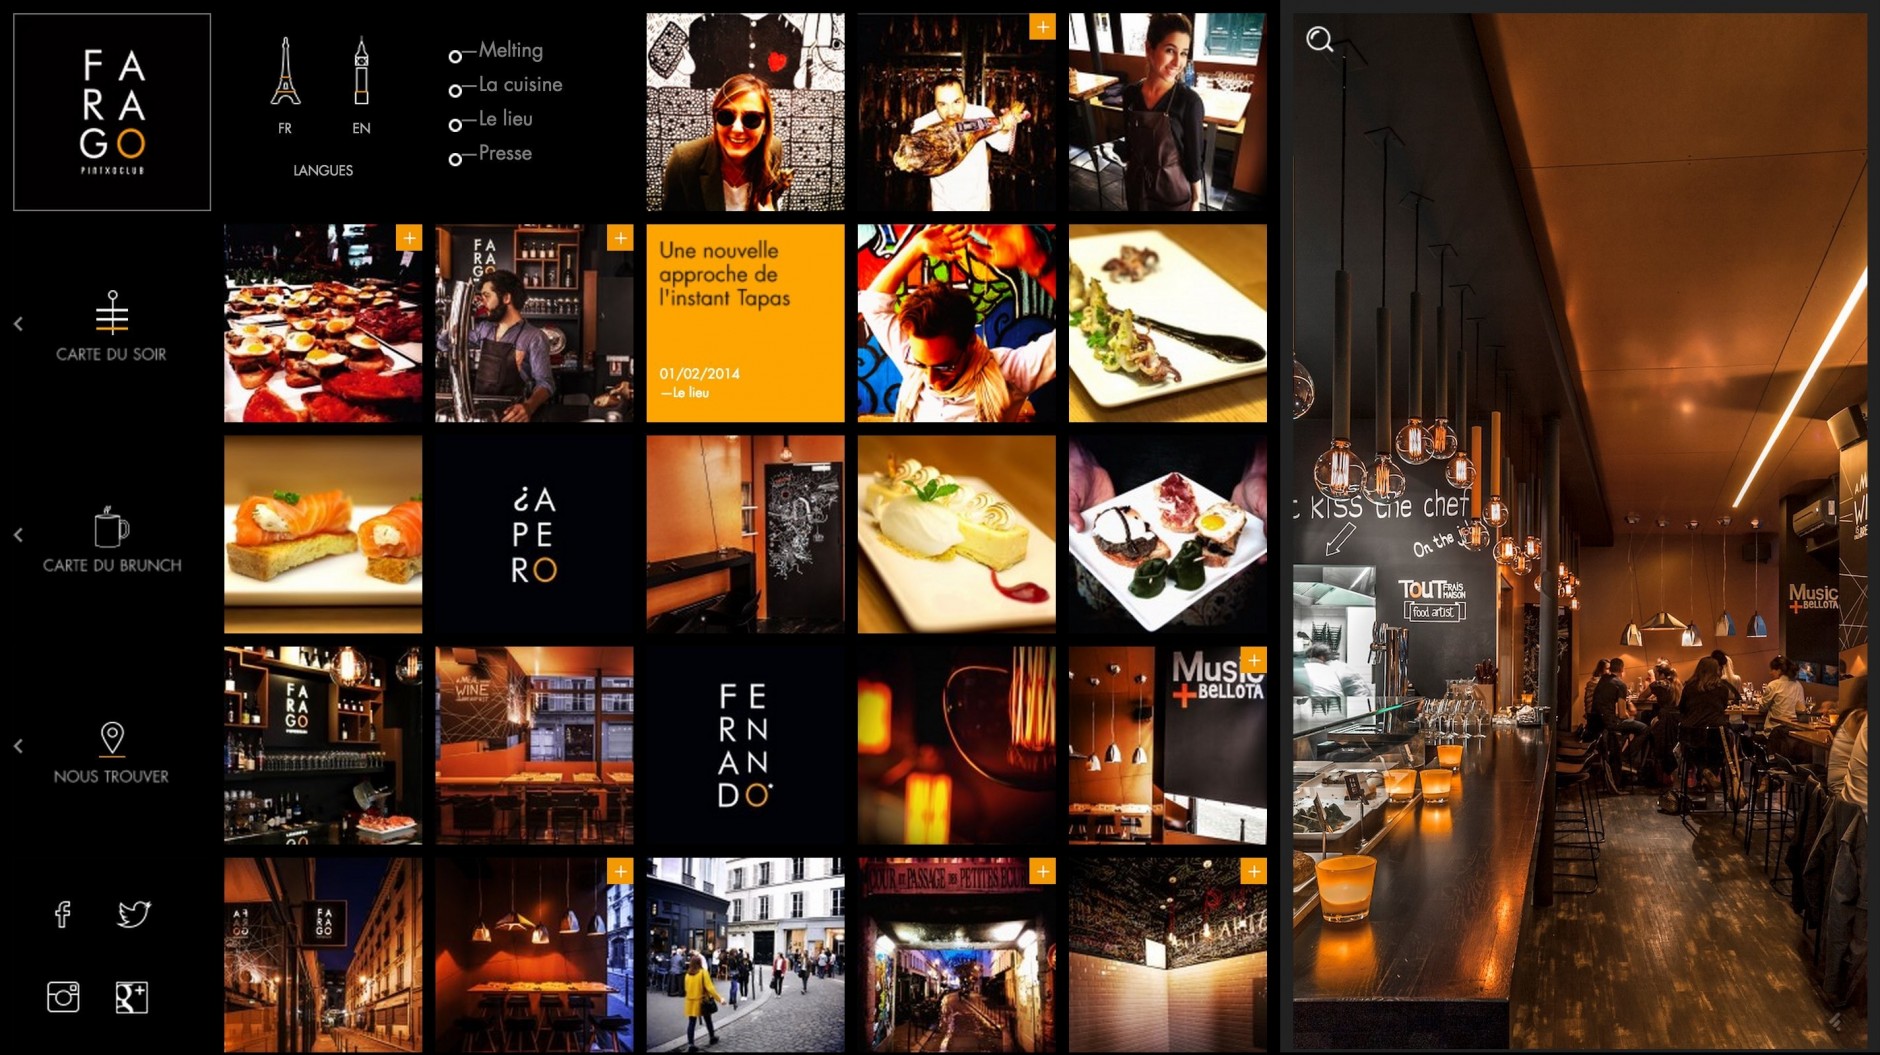 FARAGO webdesign UI restorant gastronomie bistronomie - homepage - mael burgy